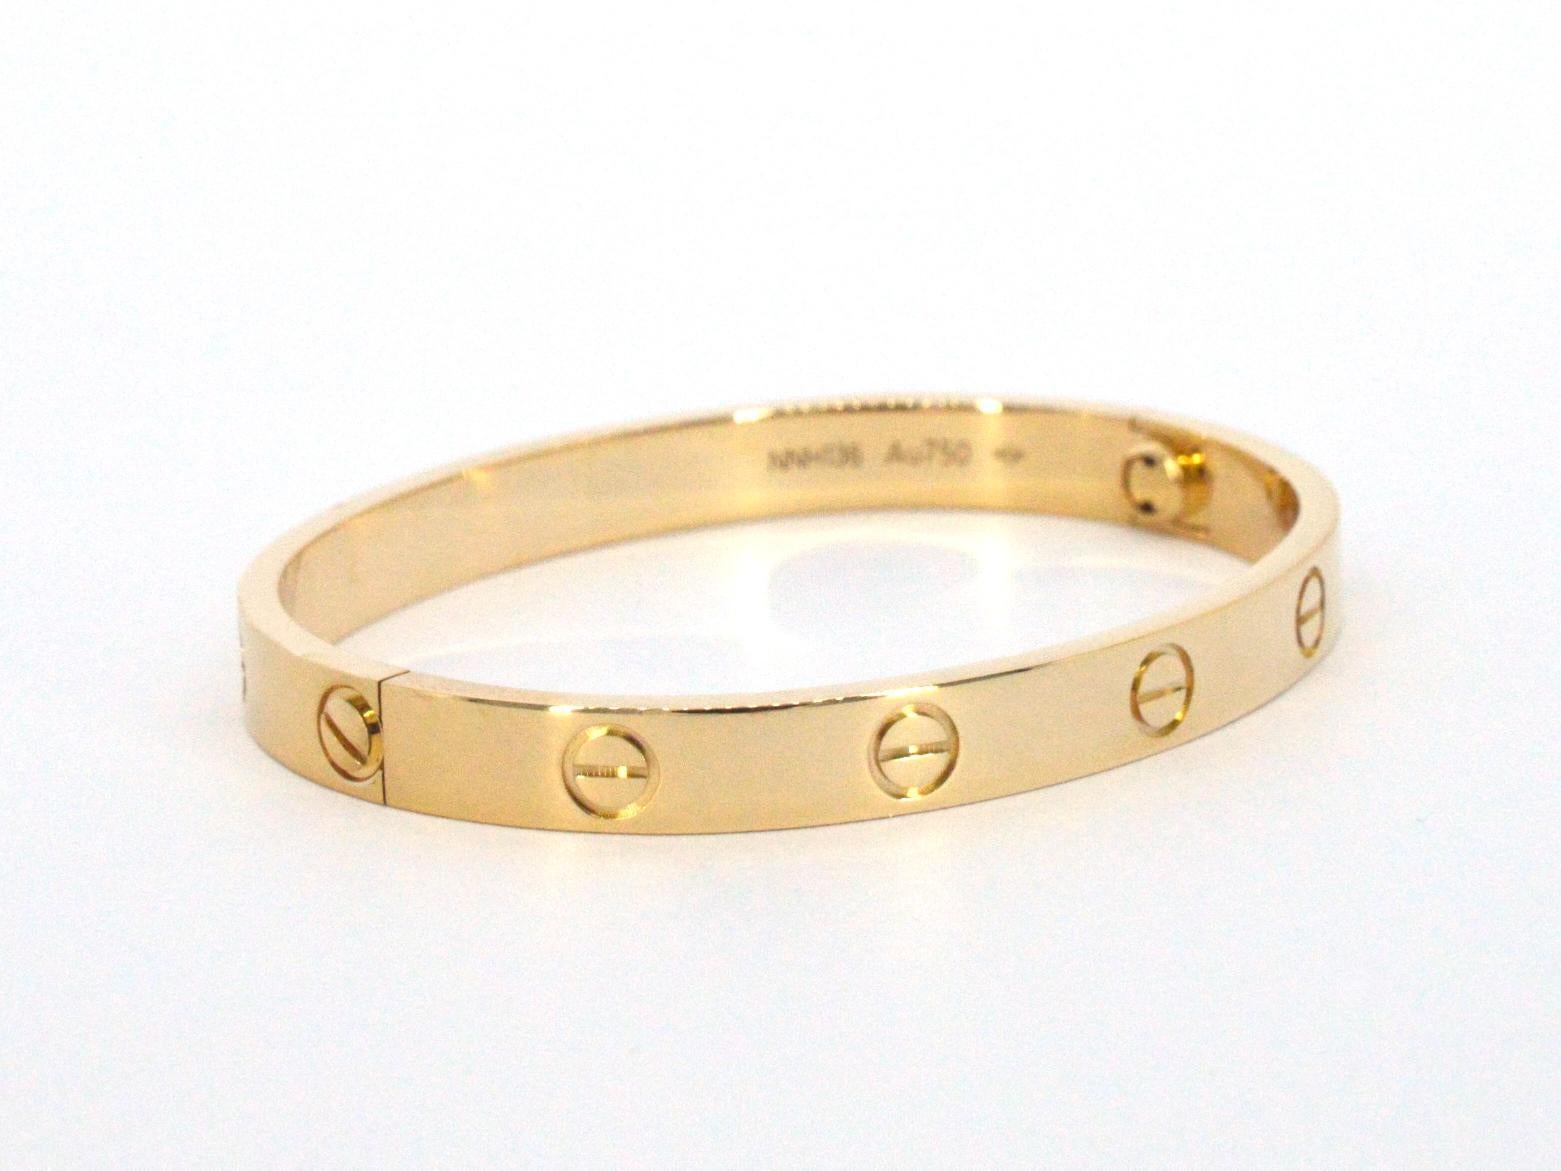 Golden Cartier LOVE Bracelet For Sale 1